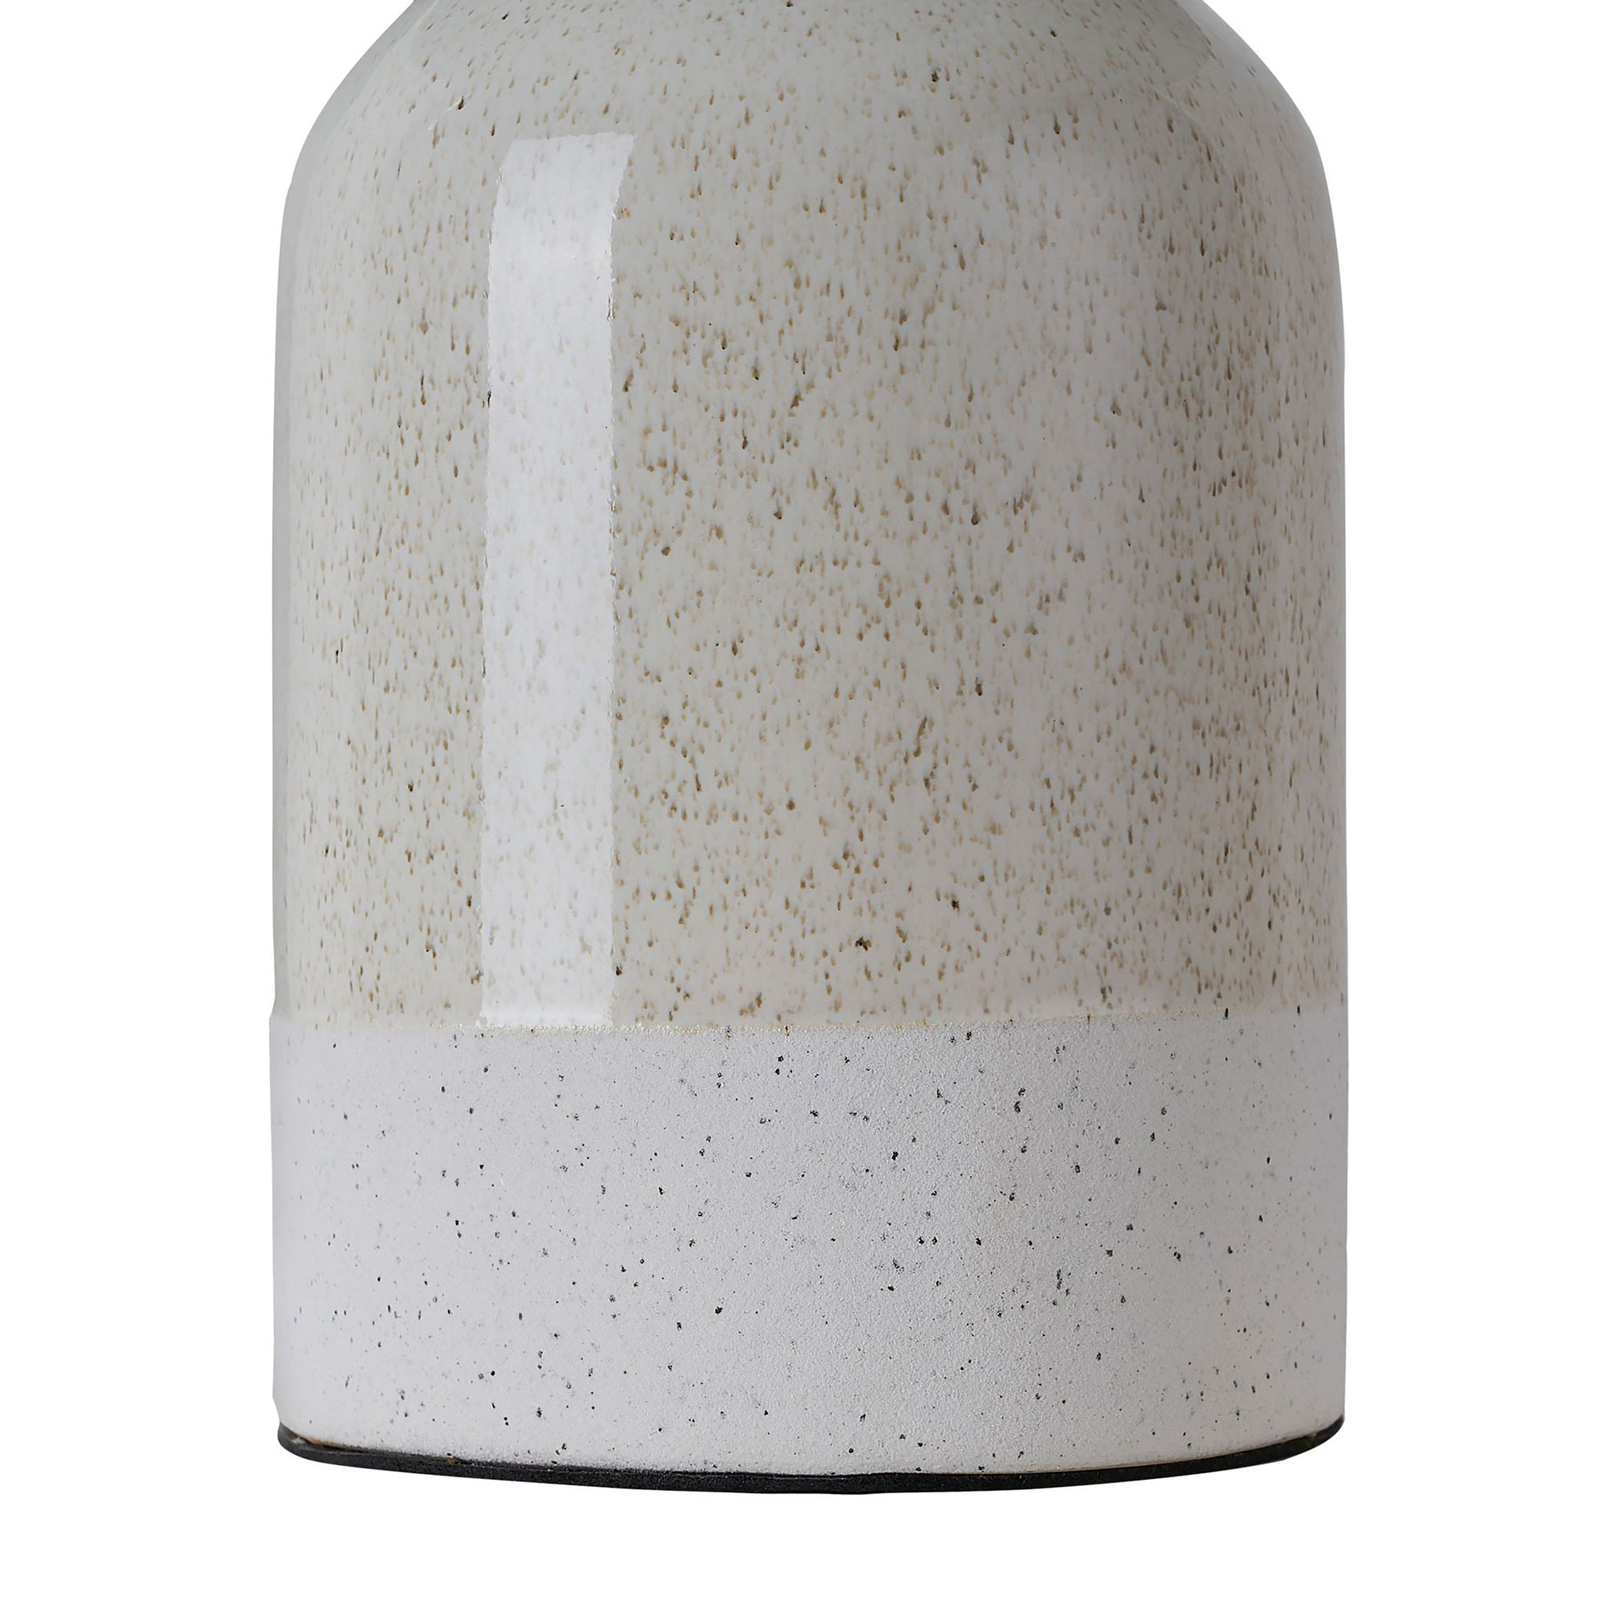 Pauleen Sandy Glow table lamp, white/beige